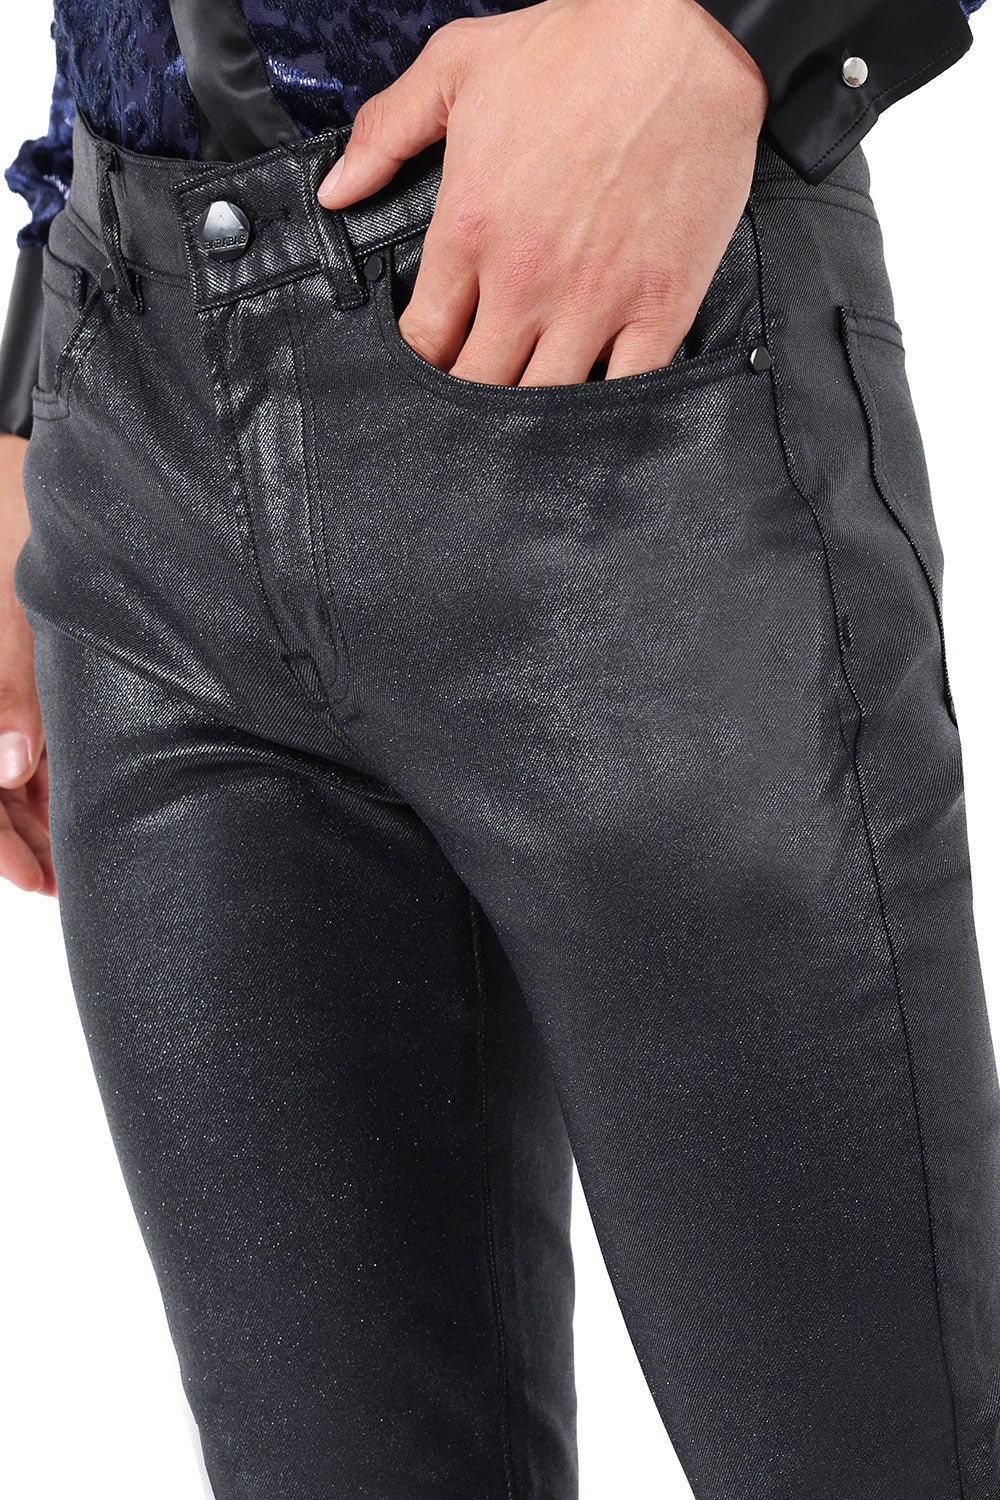 Barabas Men's Glossy Shiny Design Sparkly Luxury Dress Pants 2CPW27 Glitter Black